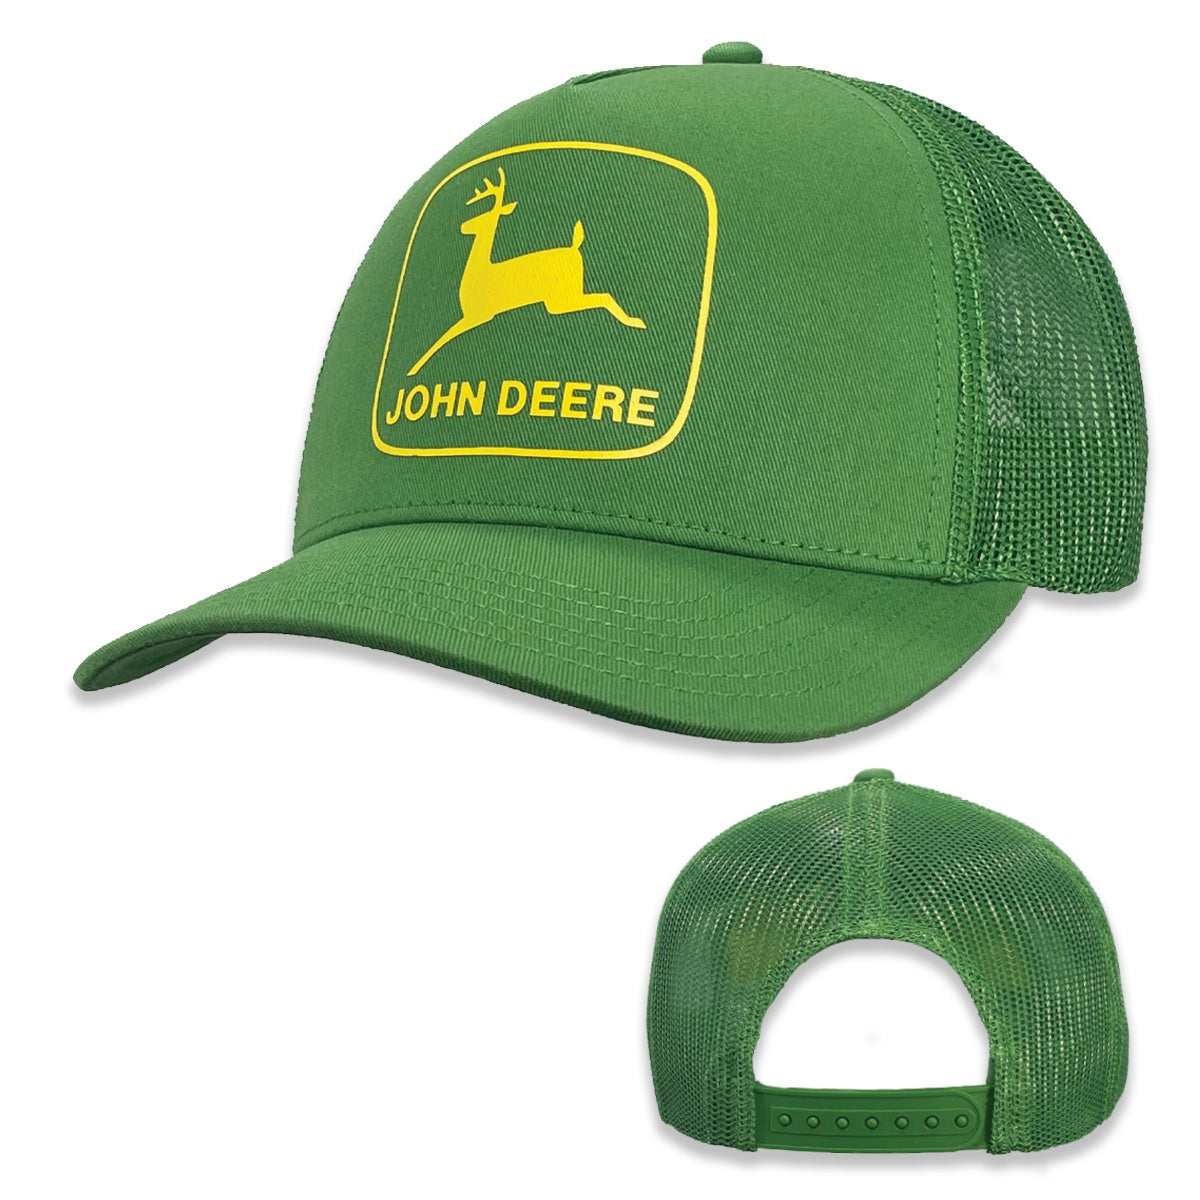 JOHN DEERE -  JD TWILL MESH TRUCKER CAP - GREEN/YELLOW LOGO